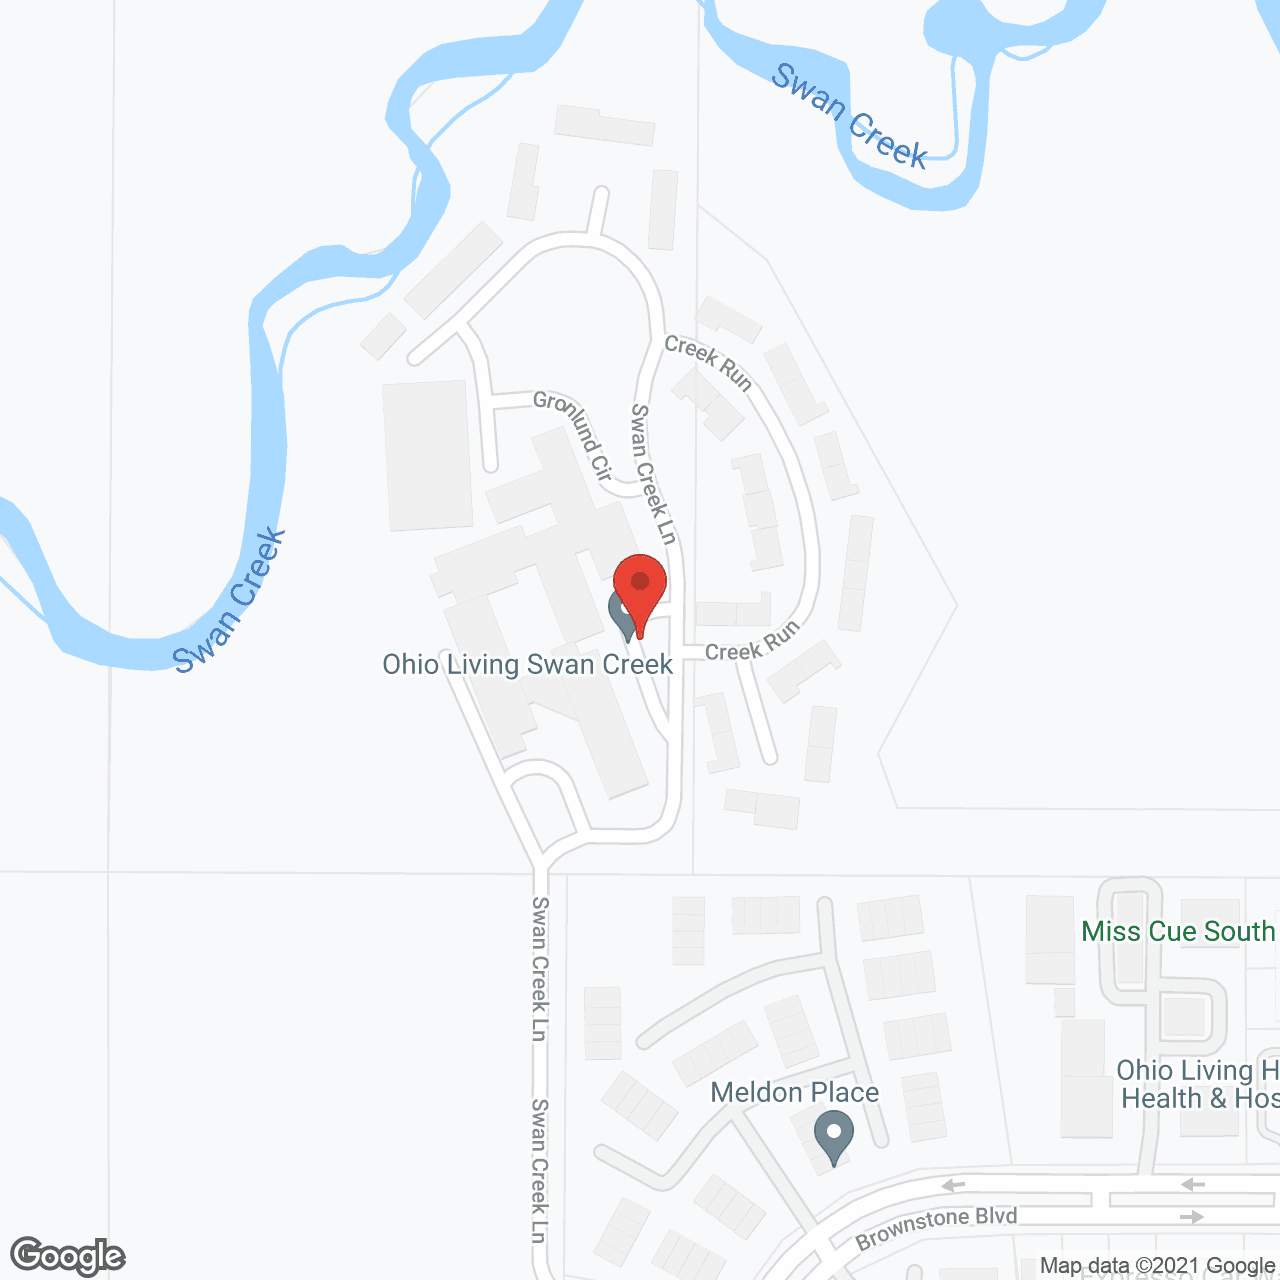 Ohio Living Swan Creek in google map